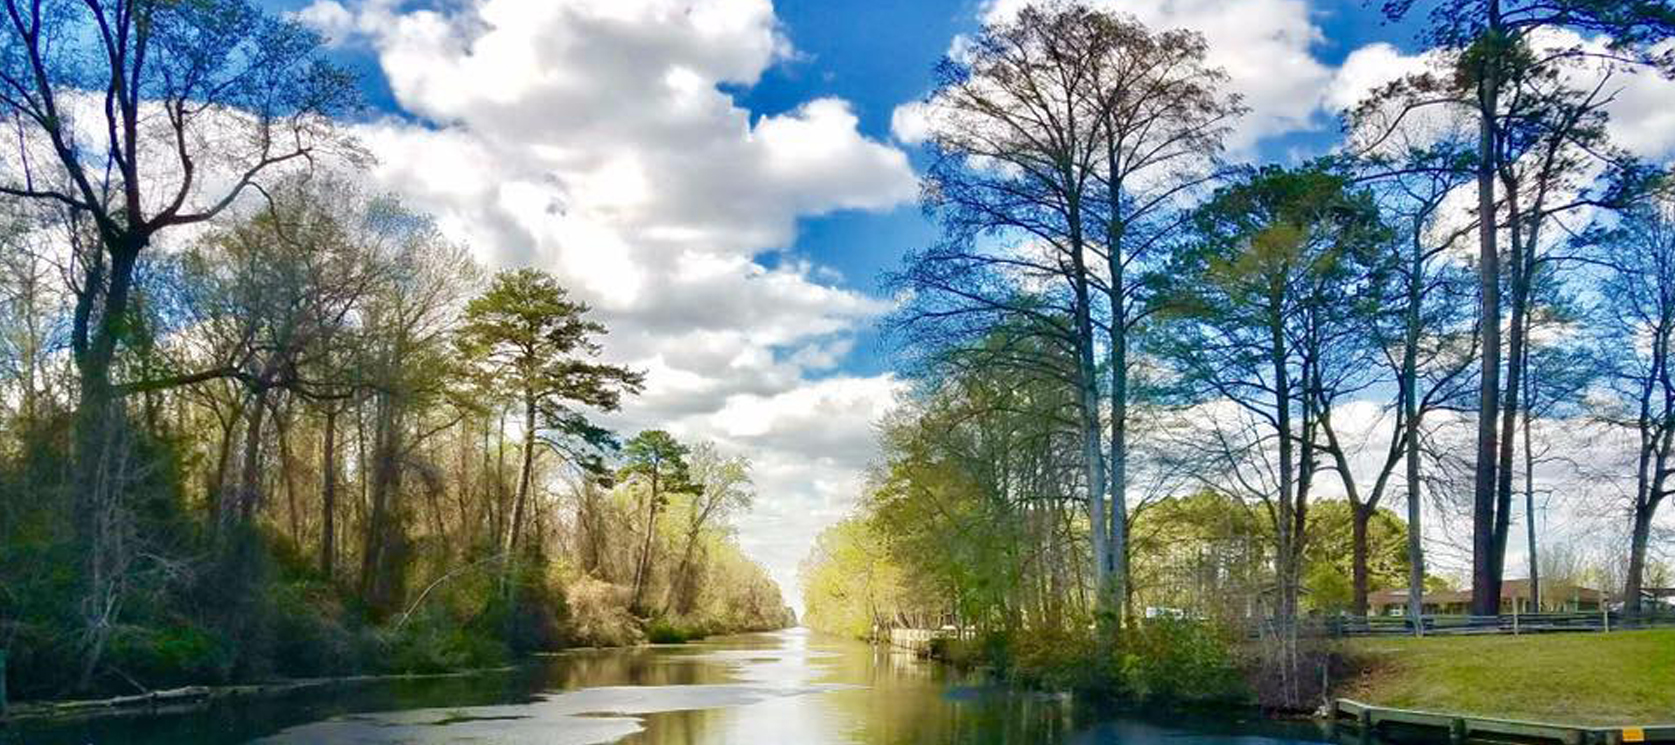 The Dismal Swamp Canal - Joseph Hyatt